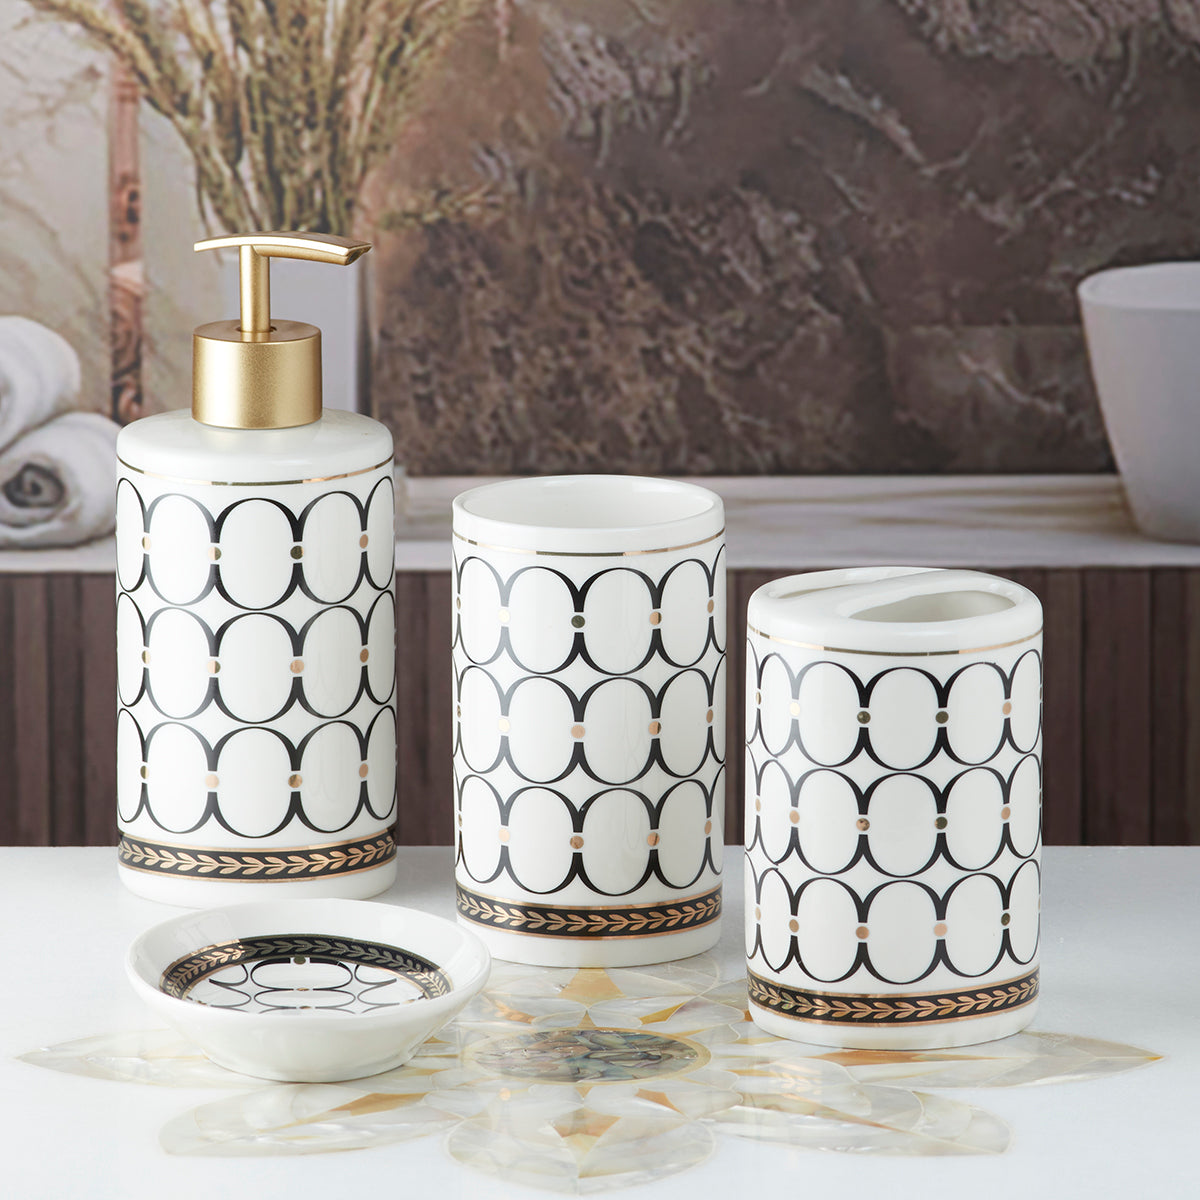 Ceramic Bathroom Accessories Set of 4 Bath Set with Soap Dispenser (9749)